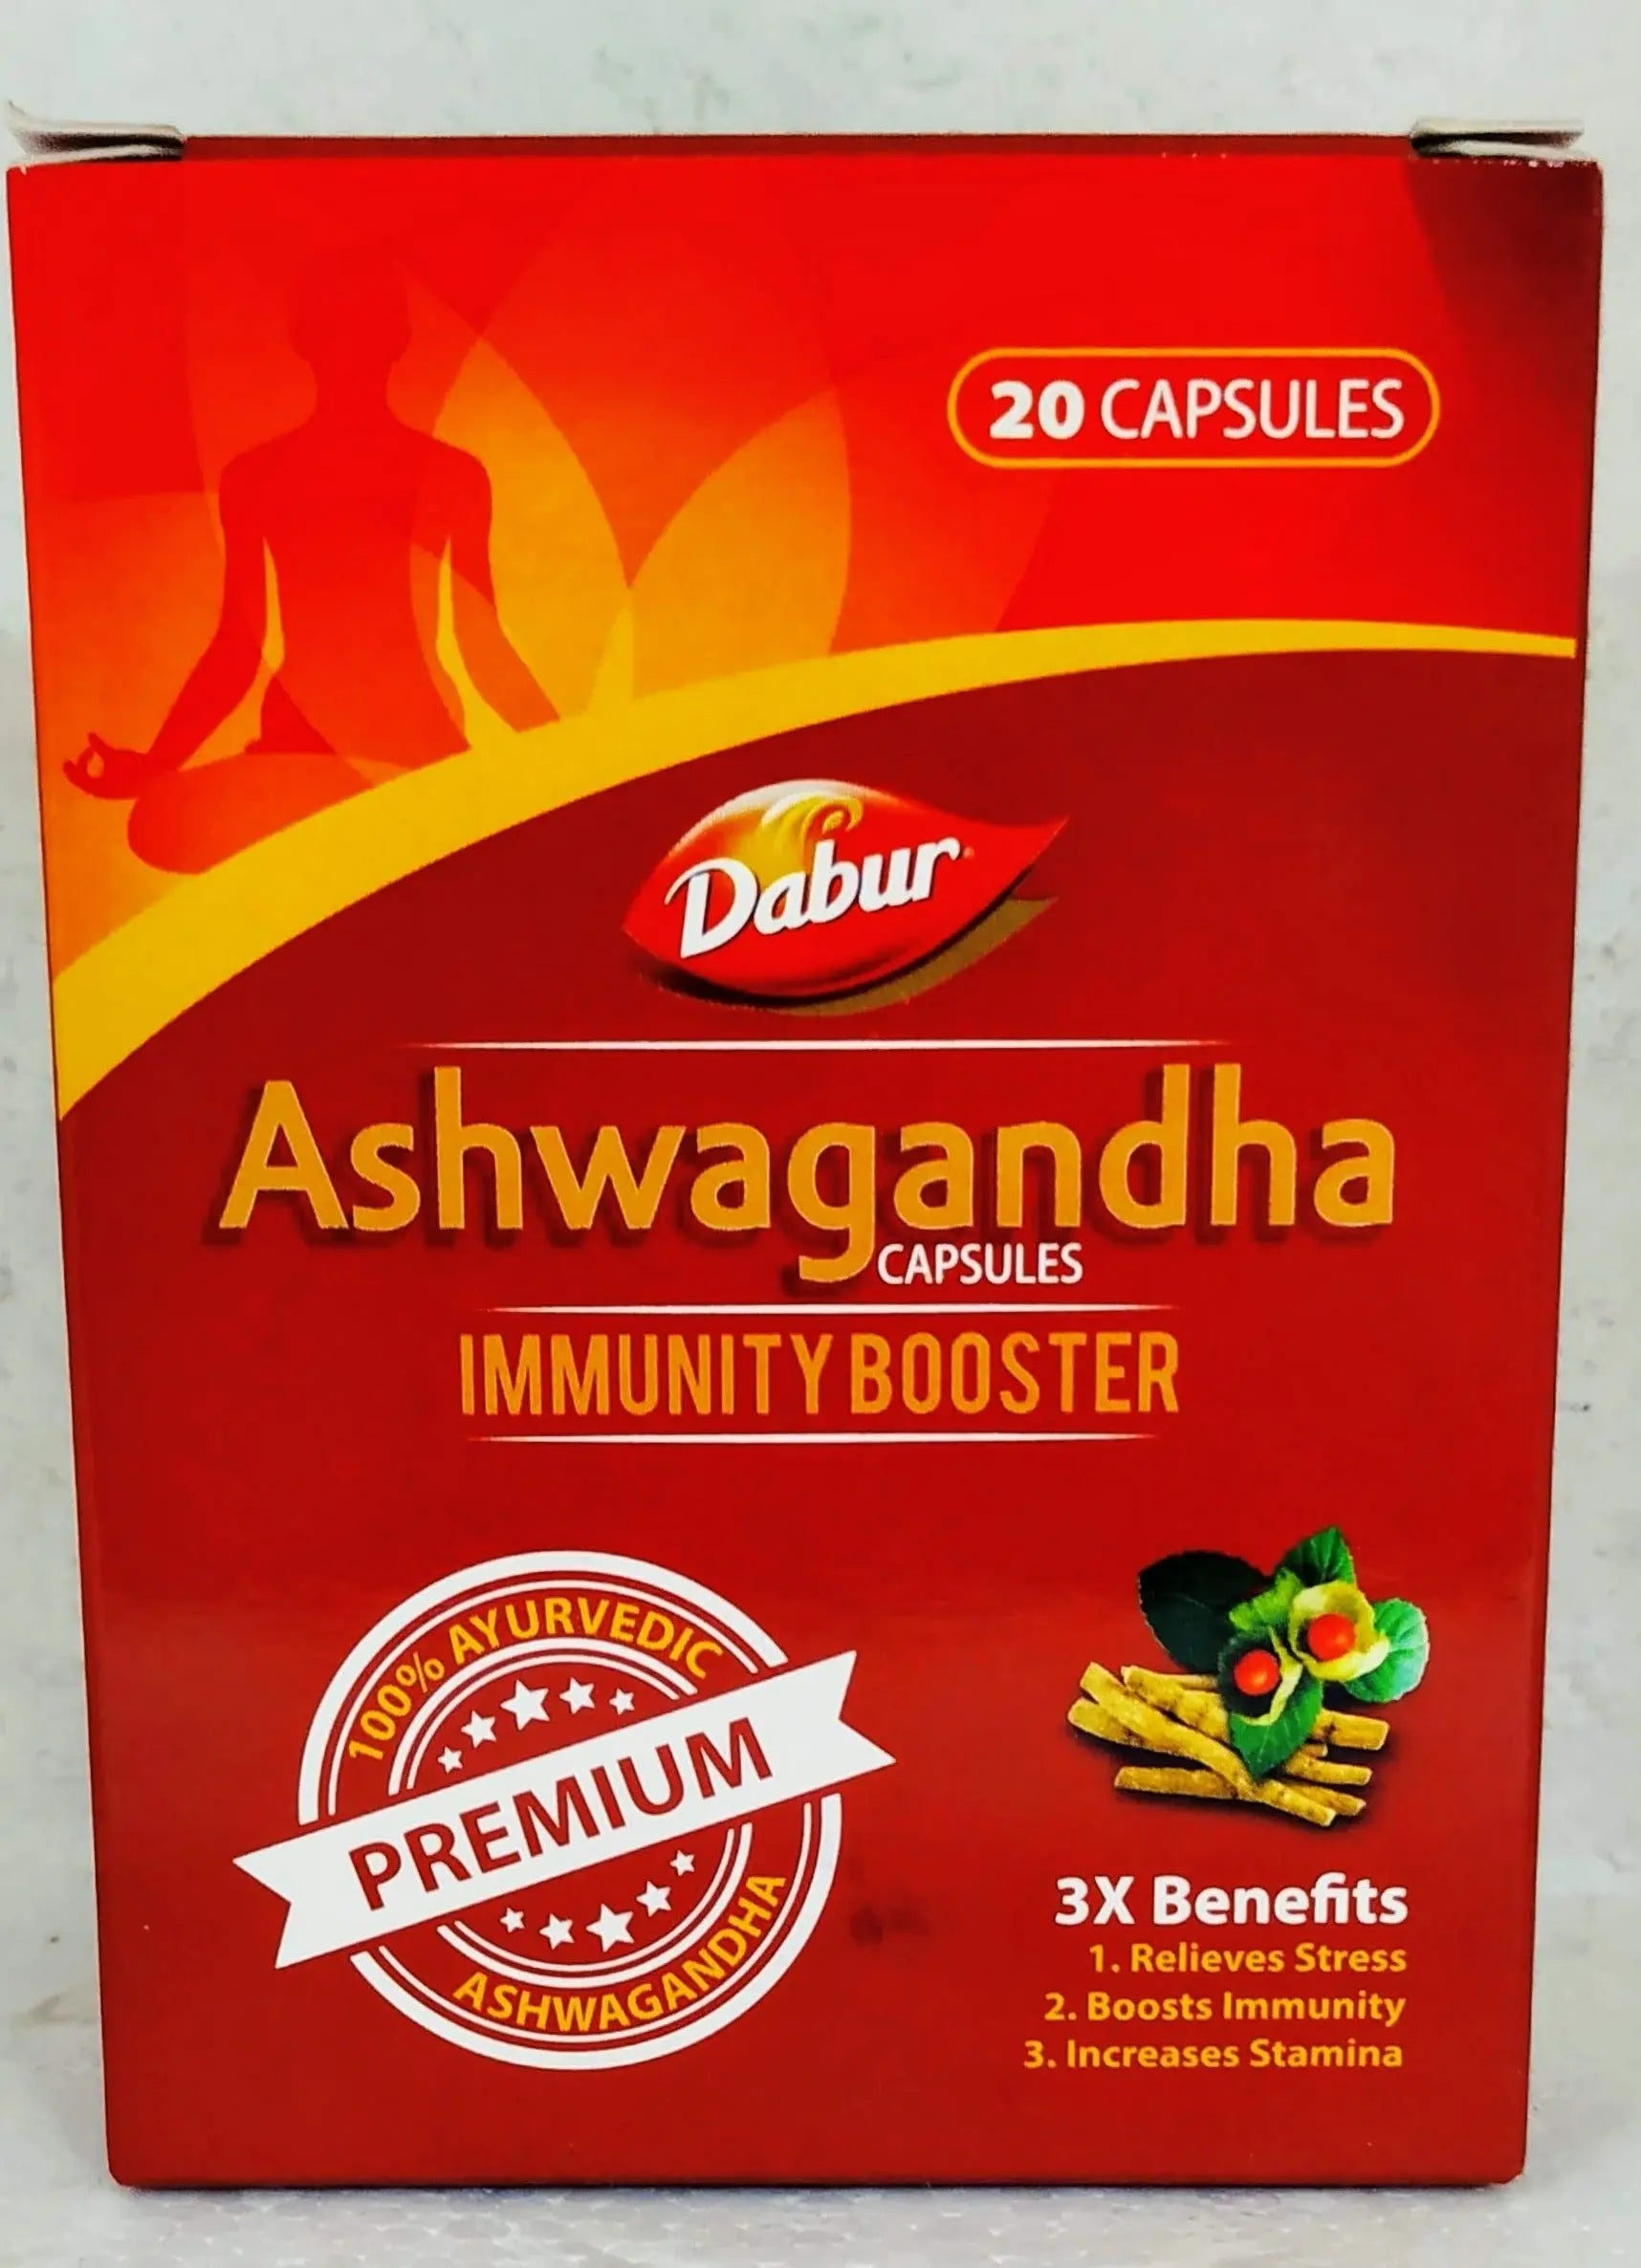 Dabur Ashwagandha Capsules - 20Capsules (Immuntiy Booster) Dabur